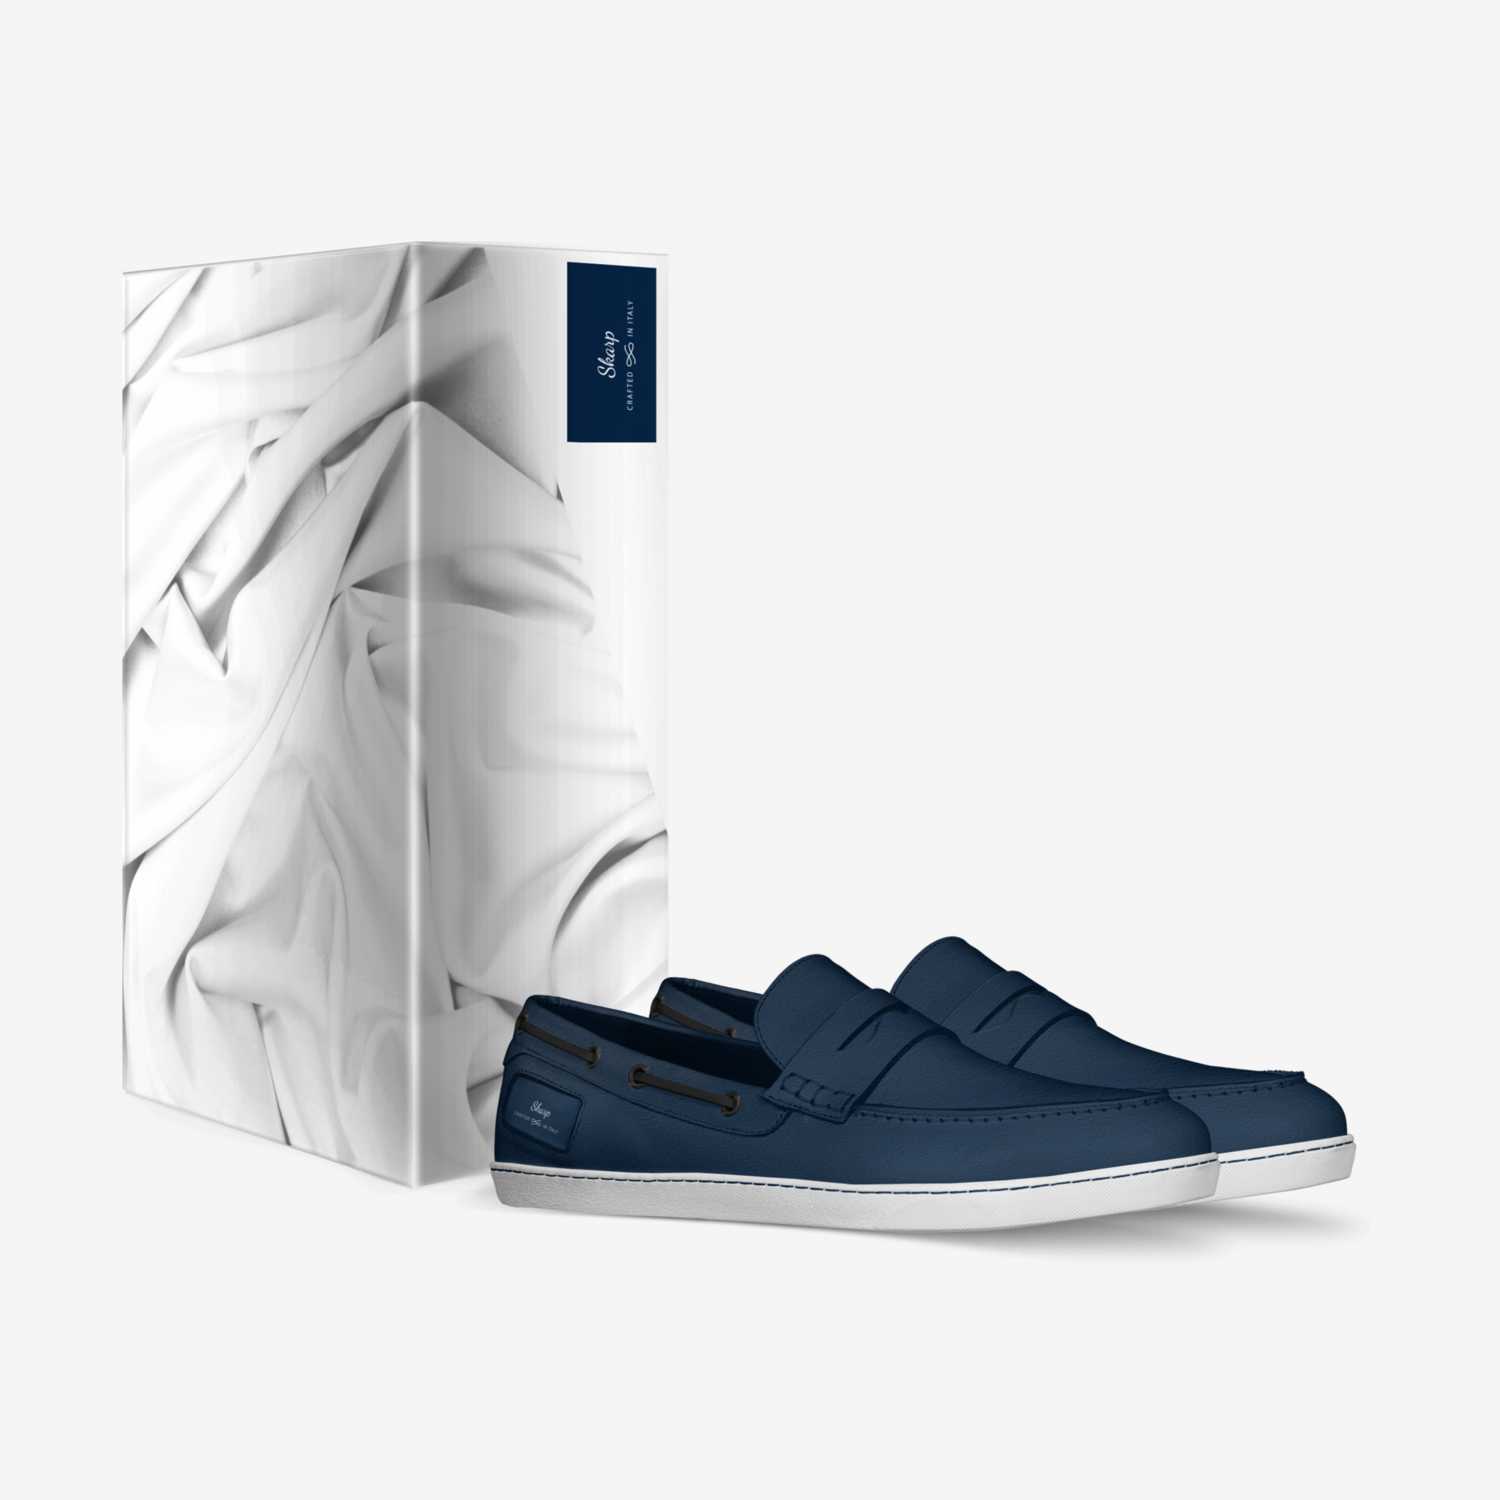 Skarp custom made in Italy shoes by Emil Skarp | Box view